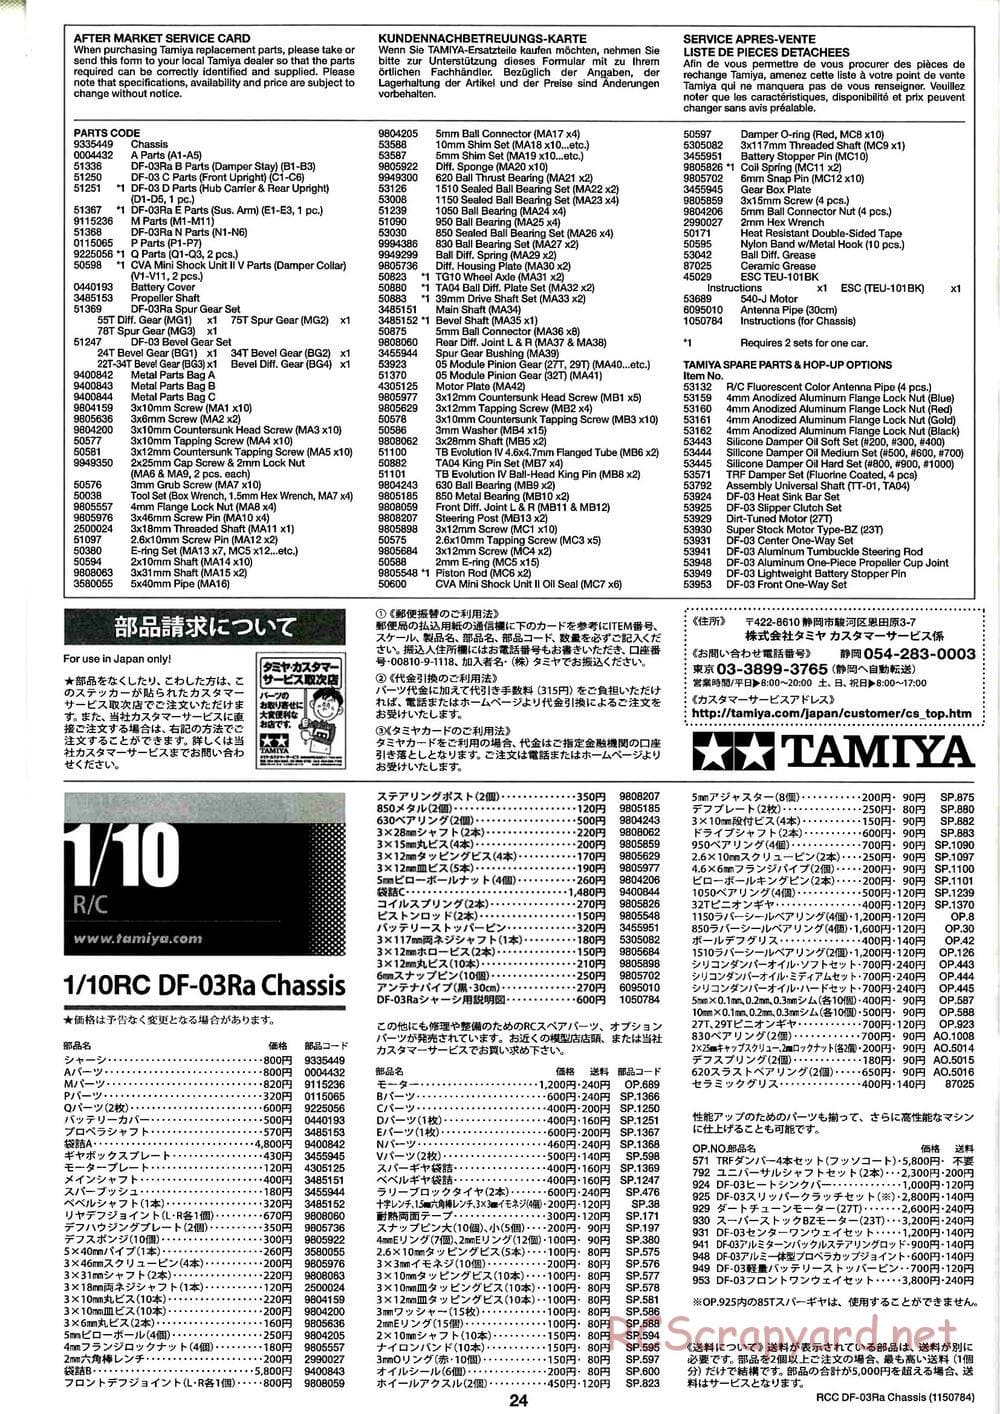 Tamiya - DF-03Ra Chassis - Manual - Page 24